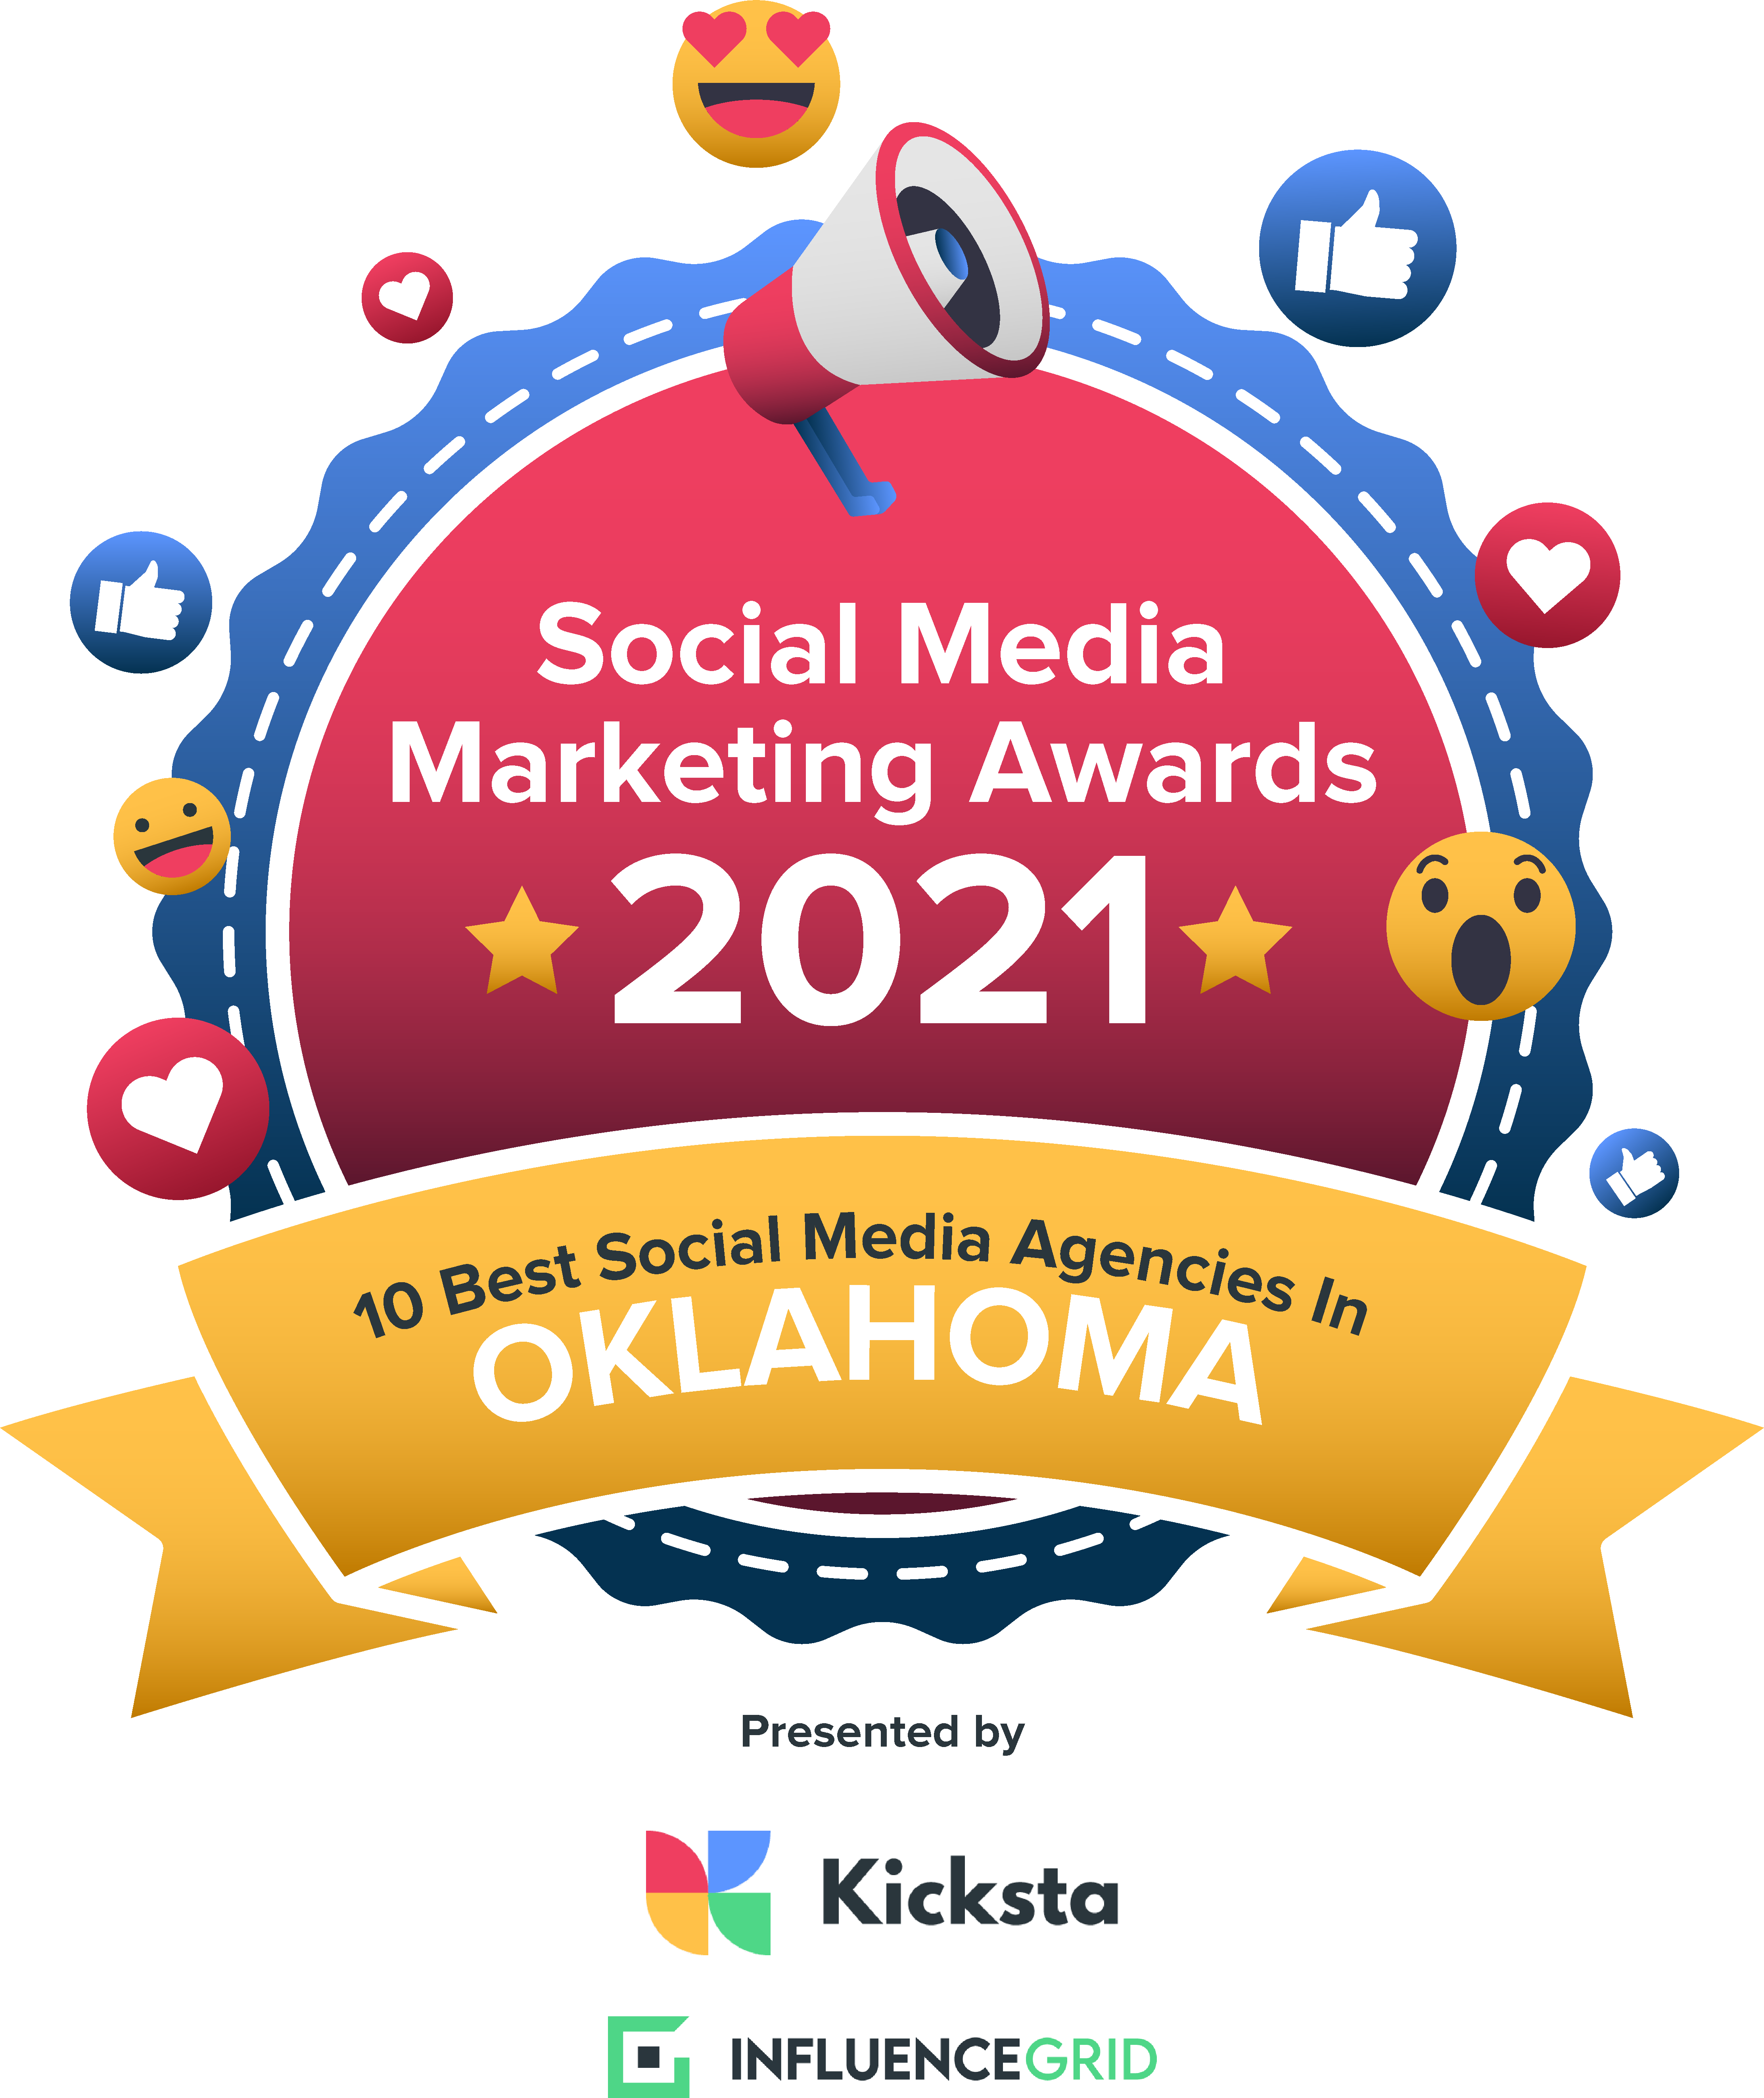 10 Best Social Media Agencies in Oklahoma